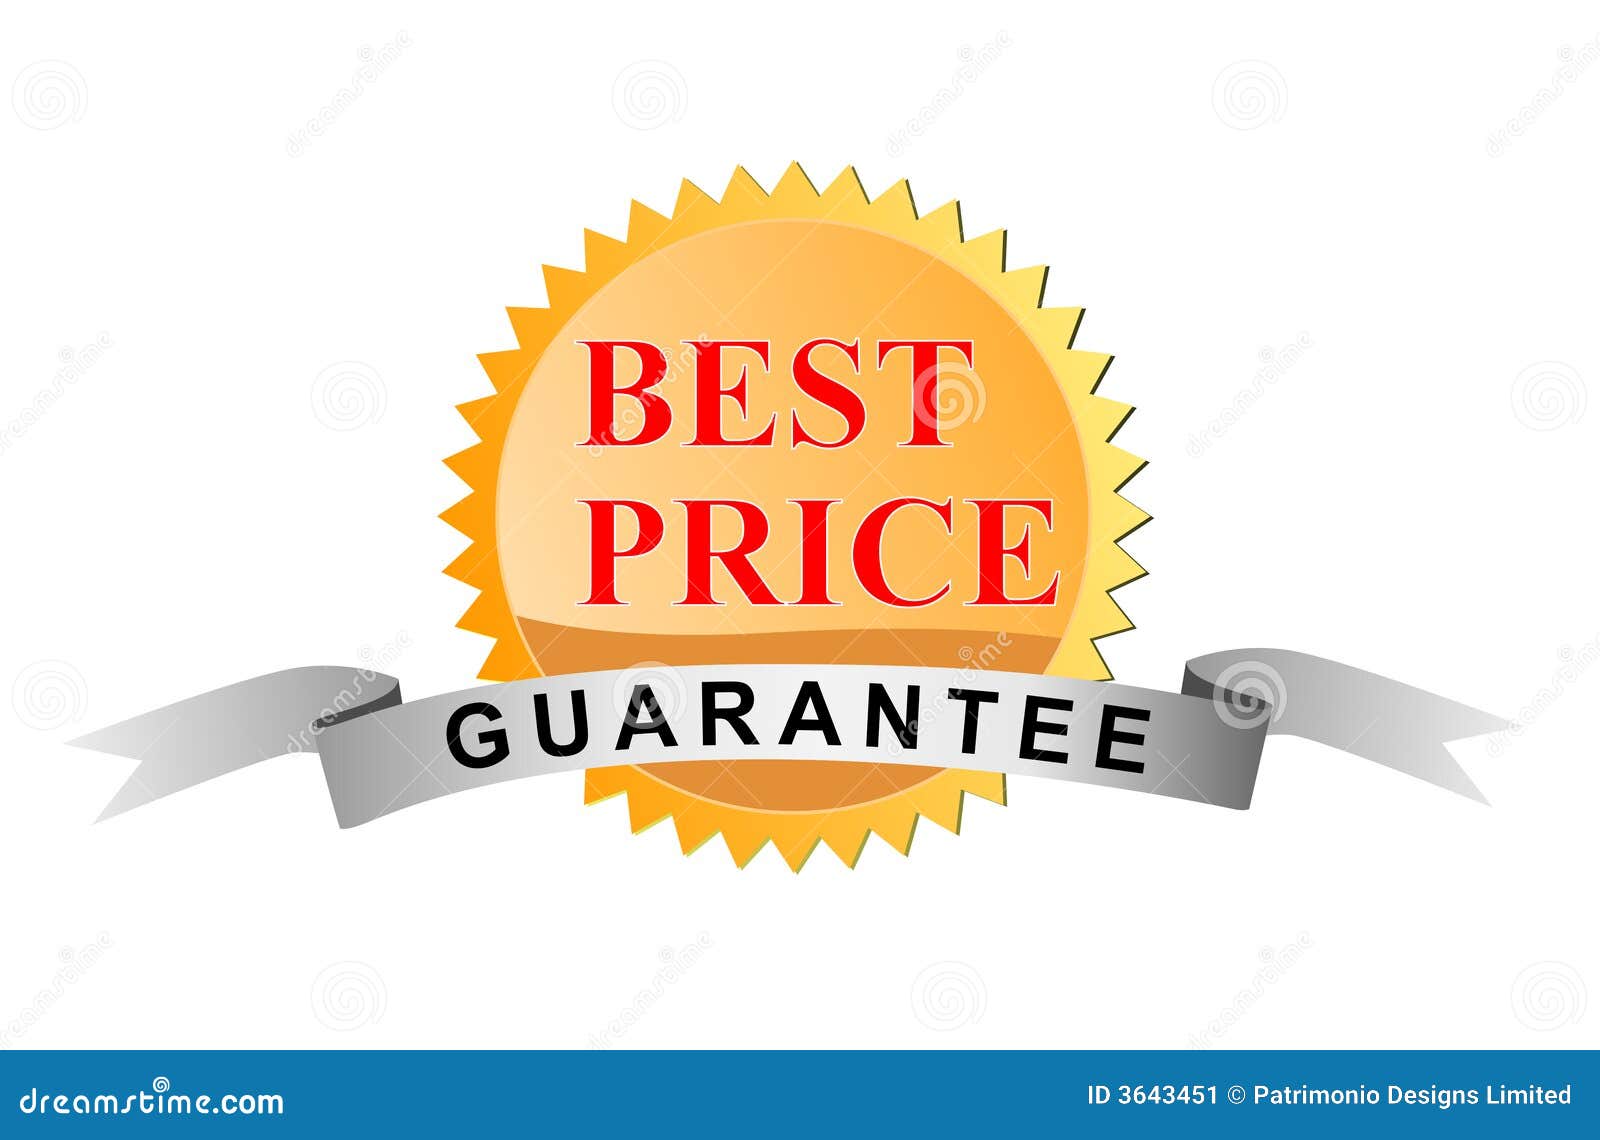 Dicks best price guarantee